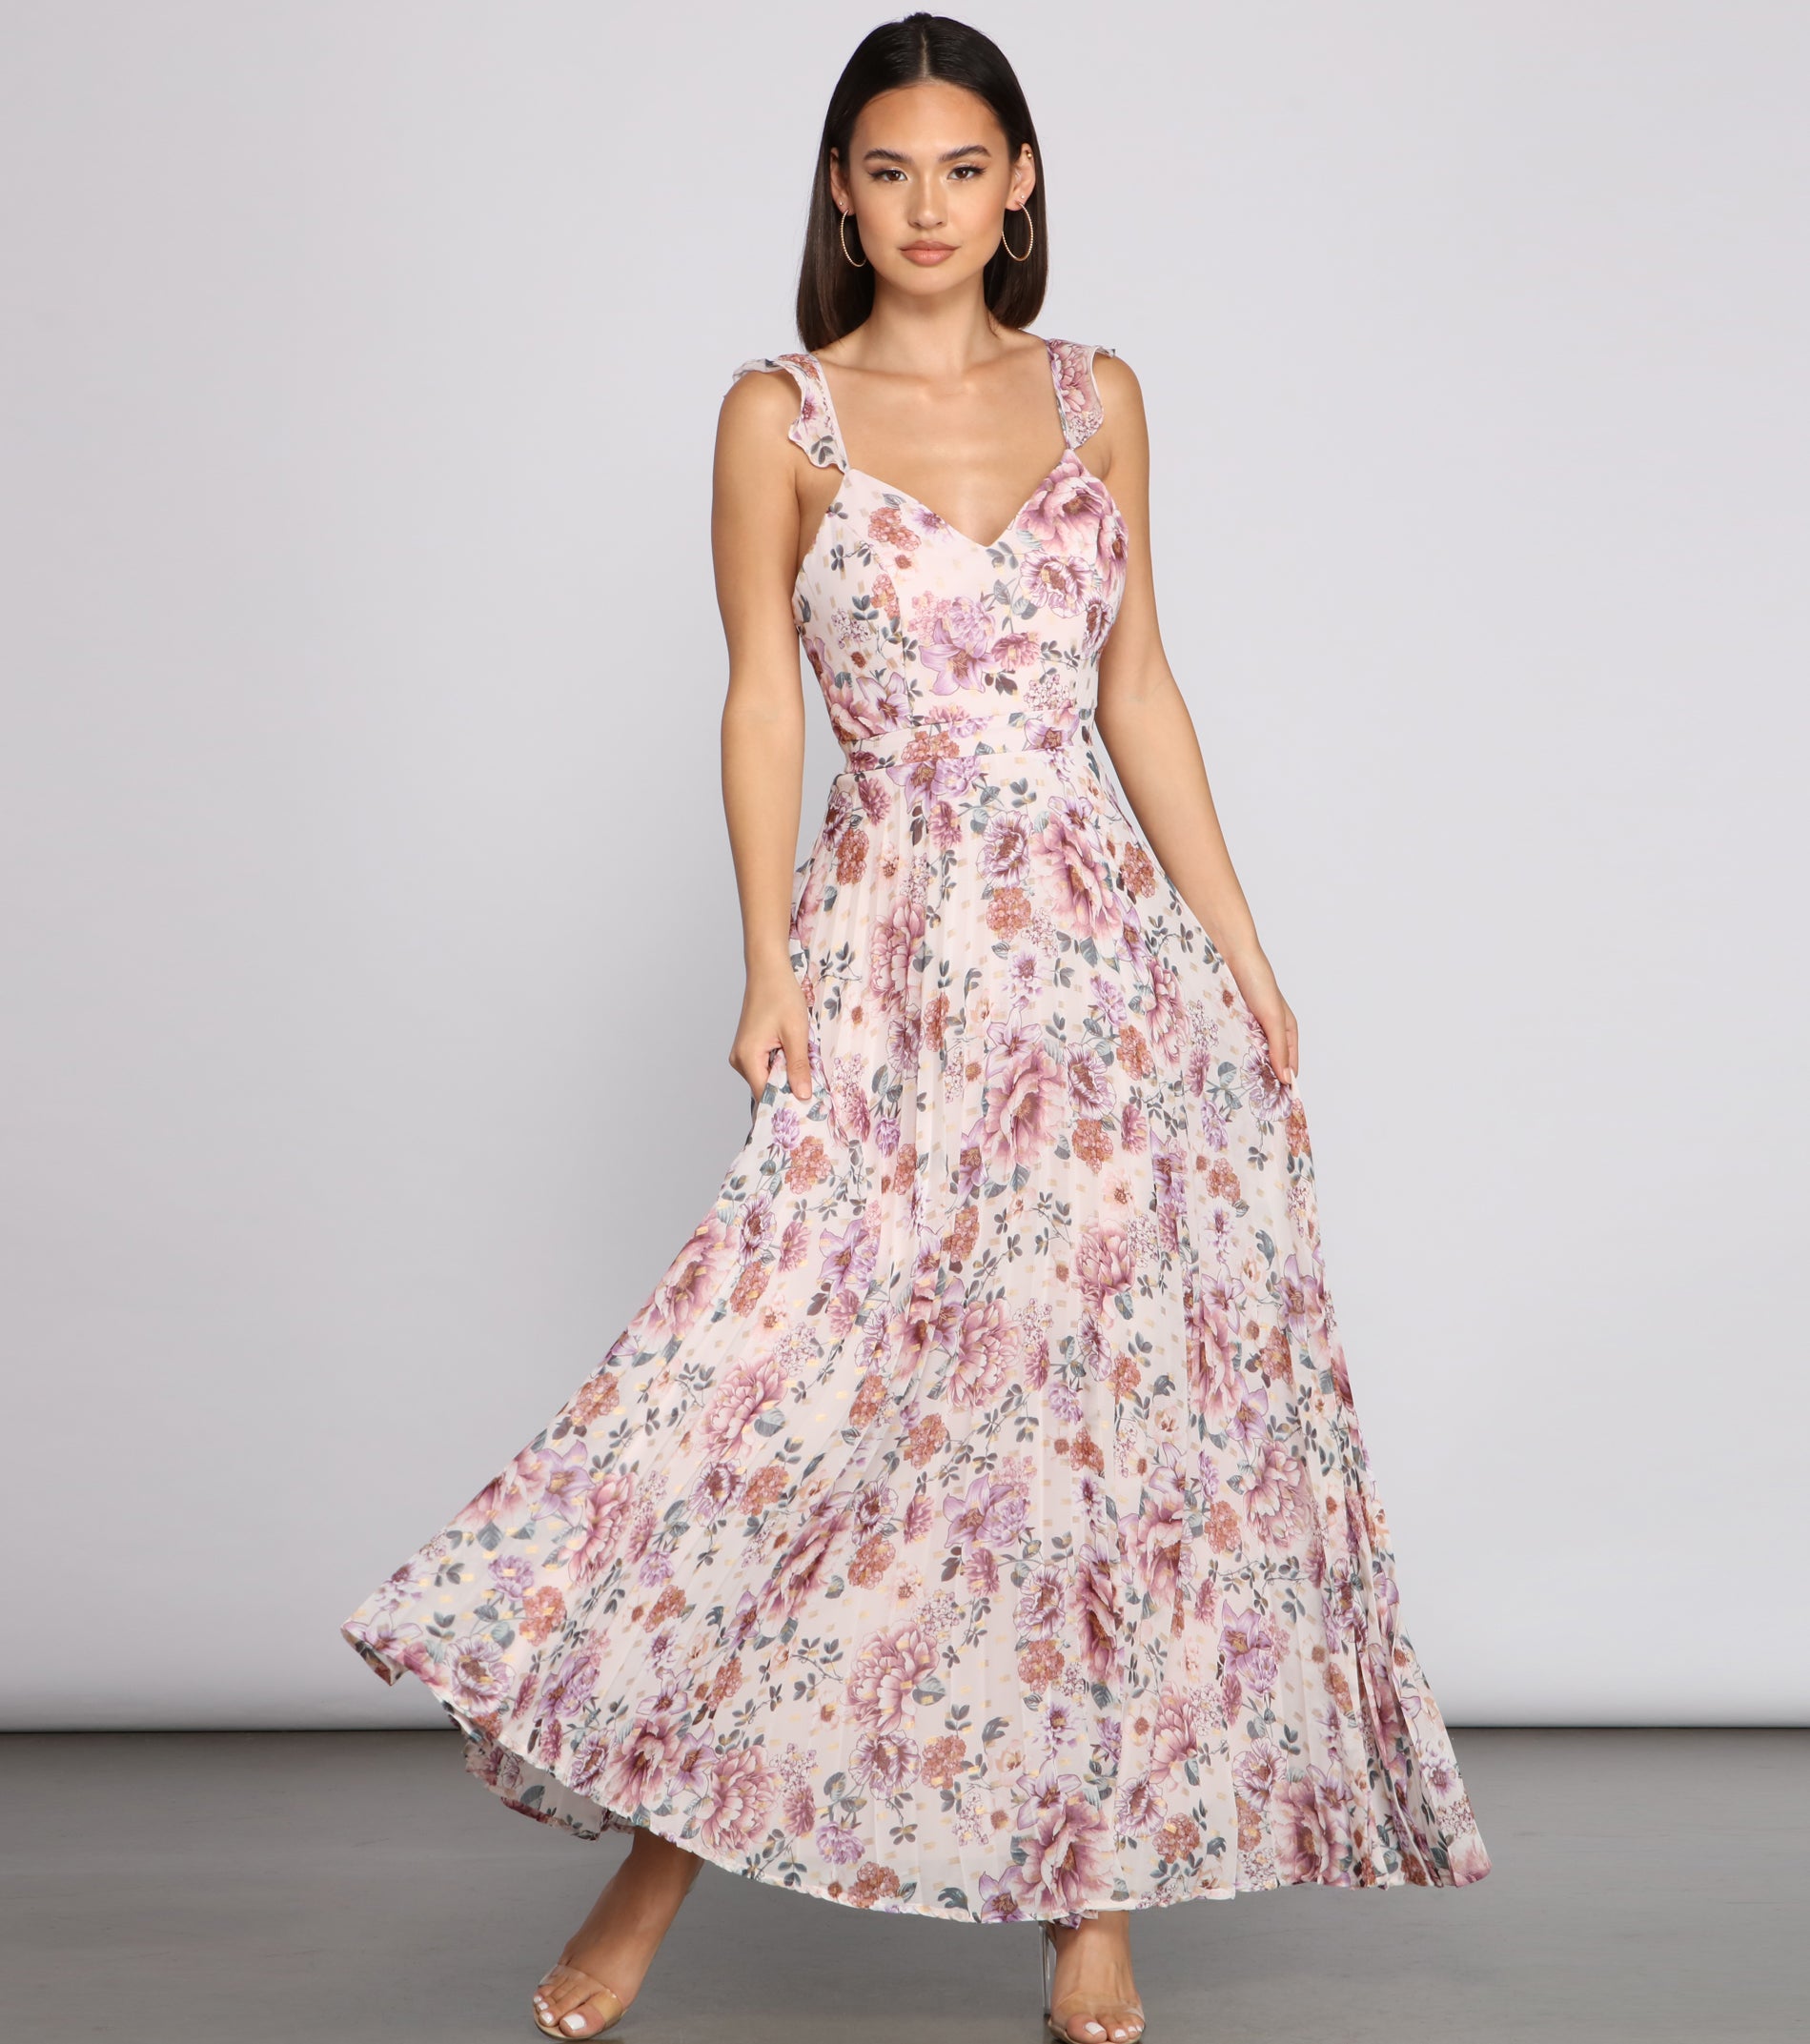 Ava Formal Floral Pleated Dress & Windsor